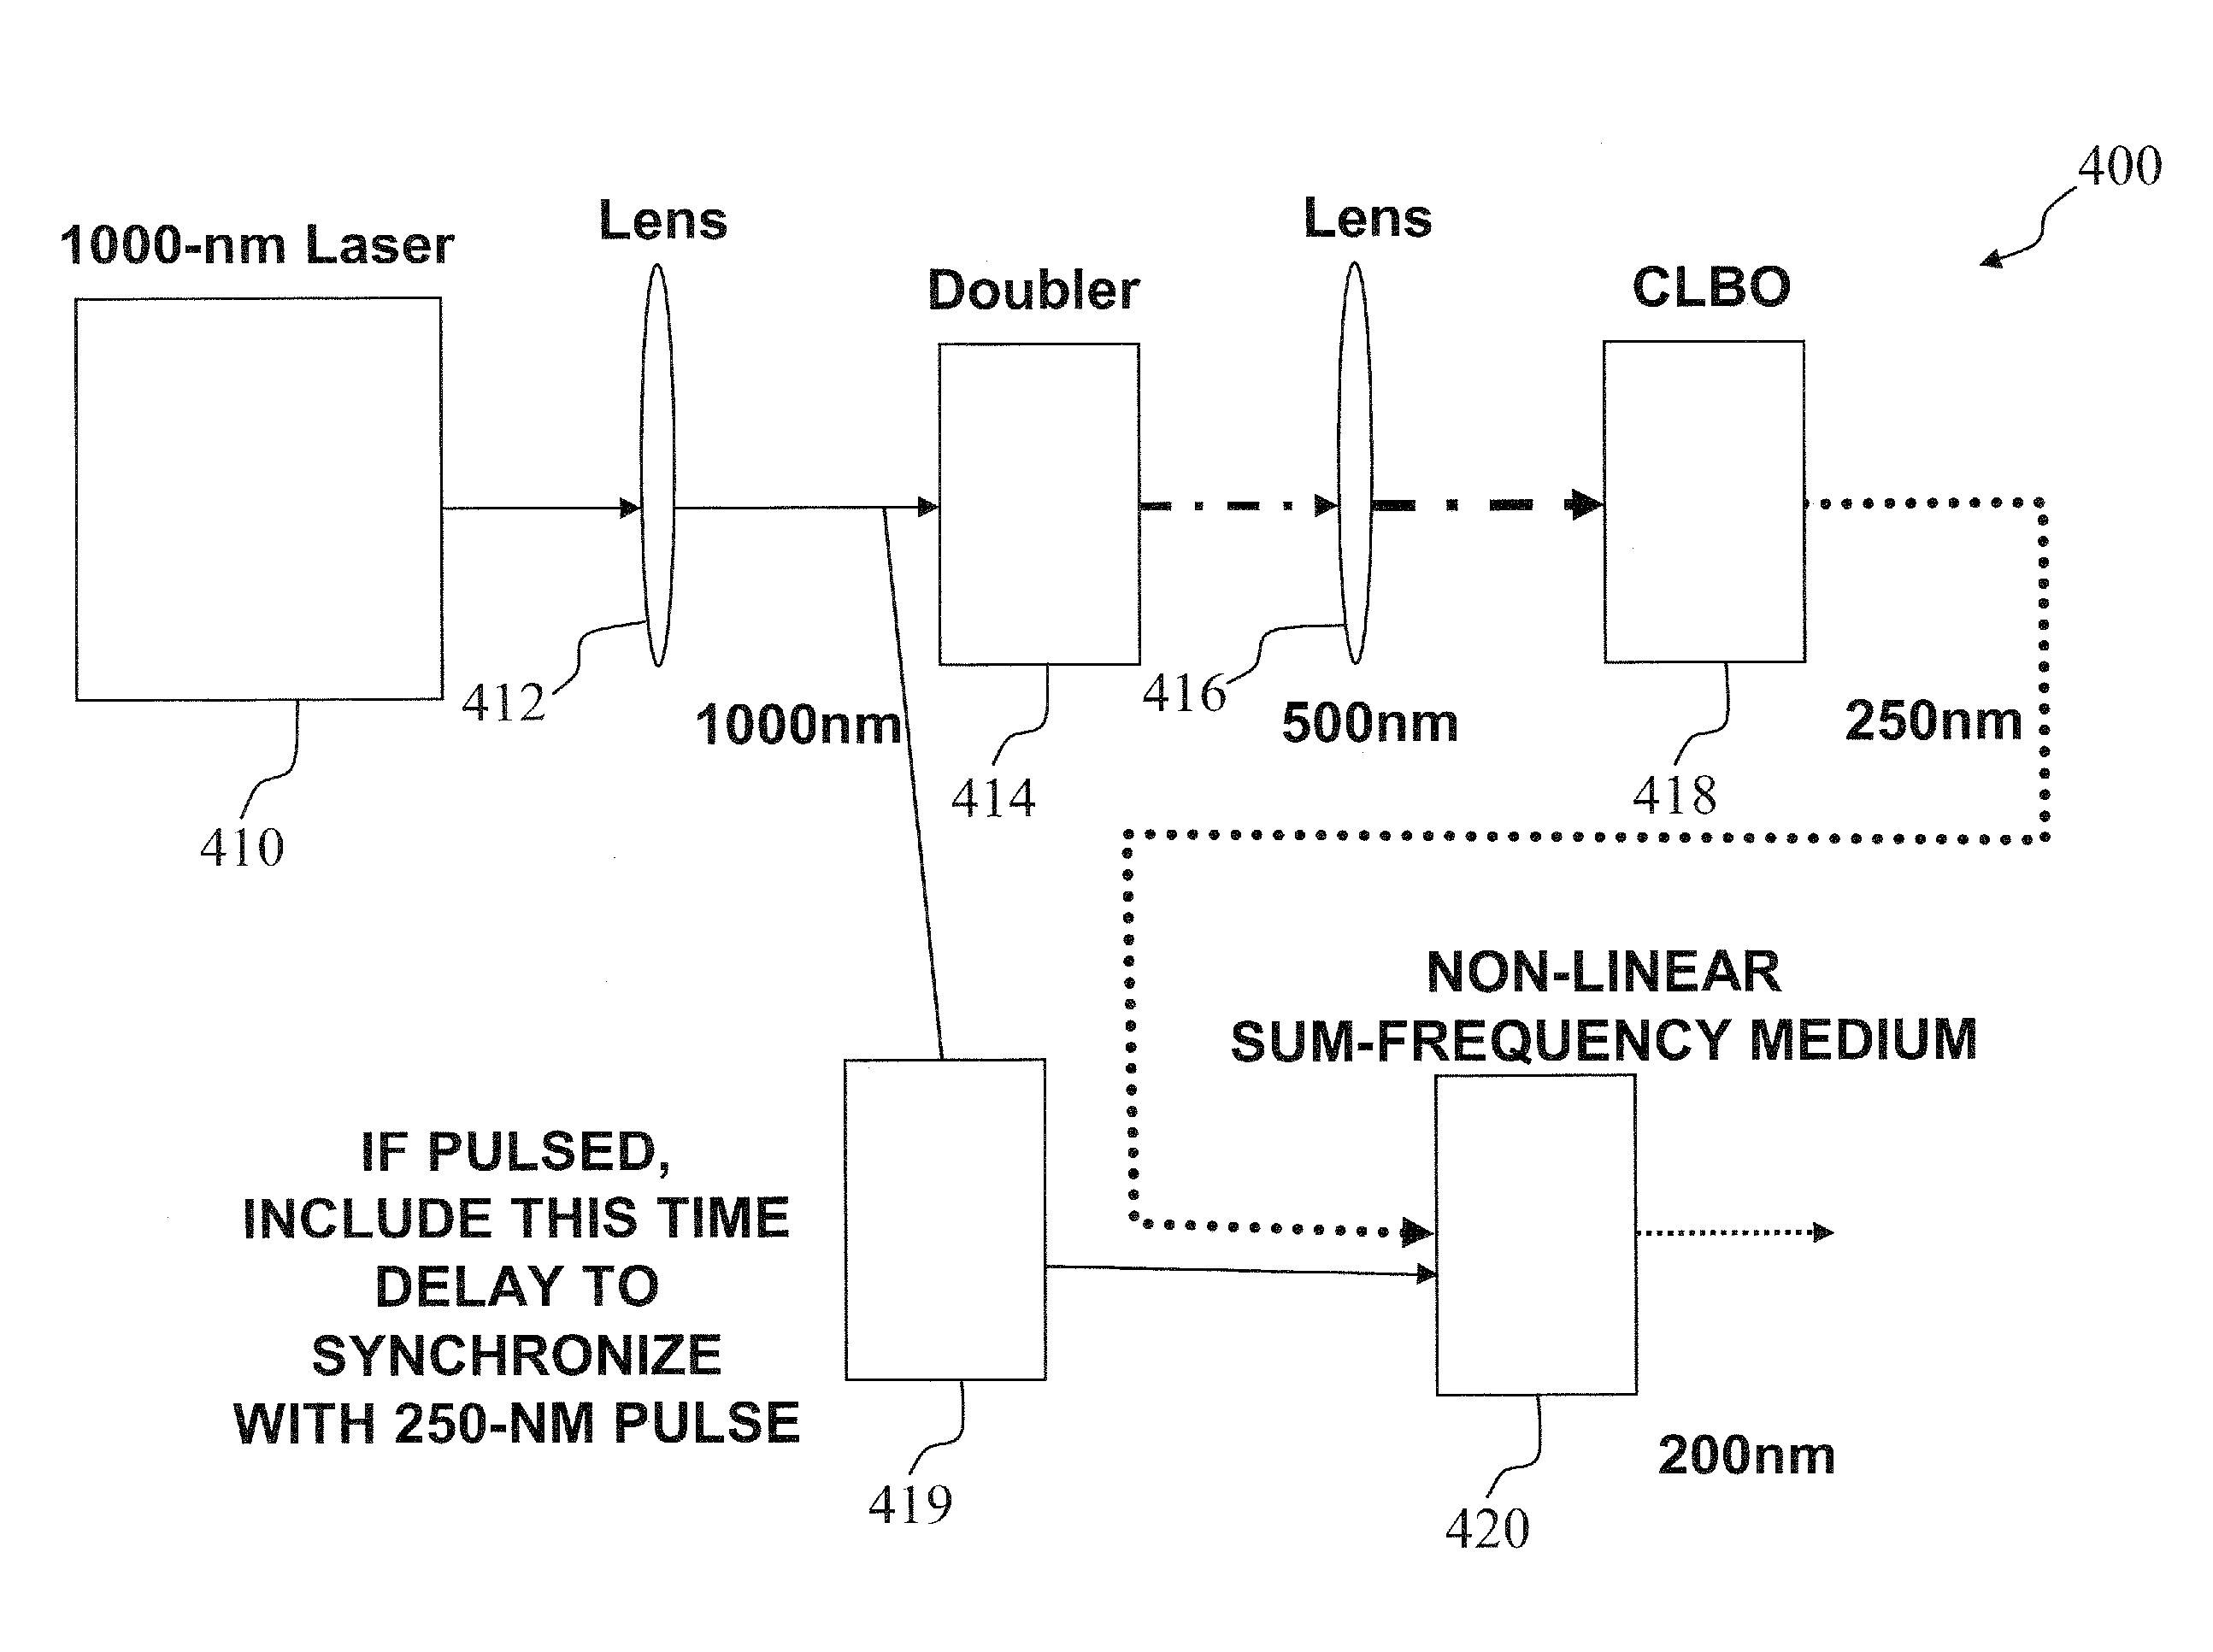 Ultraviolet laser system and method having wavelength in the 200-nm range